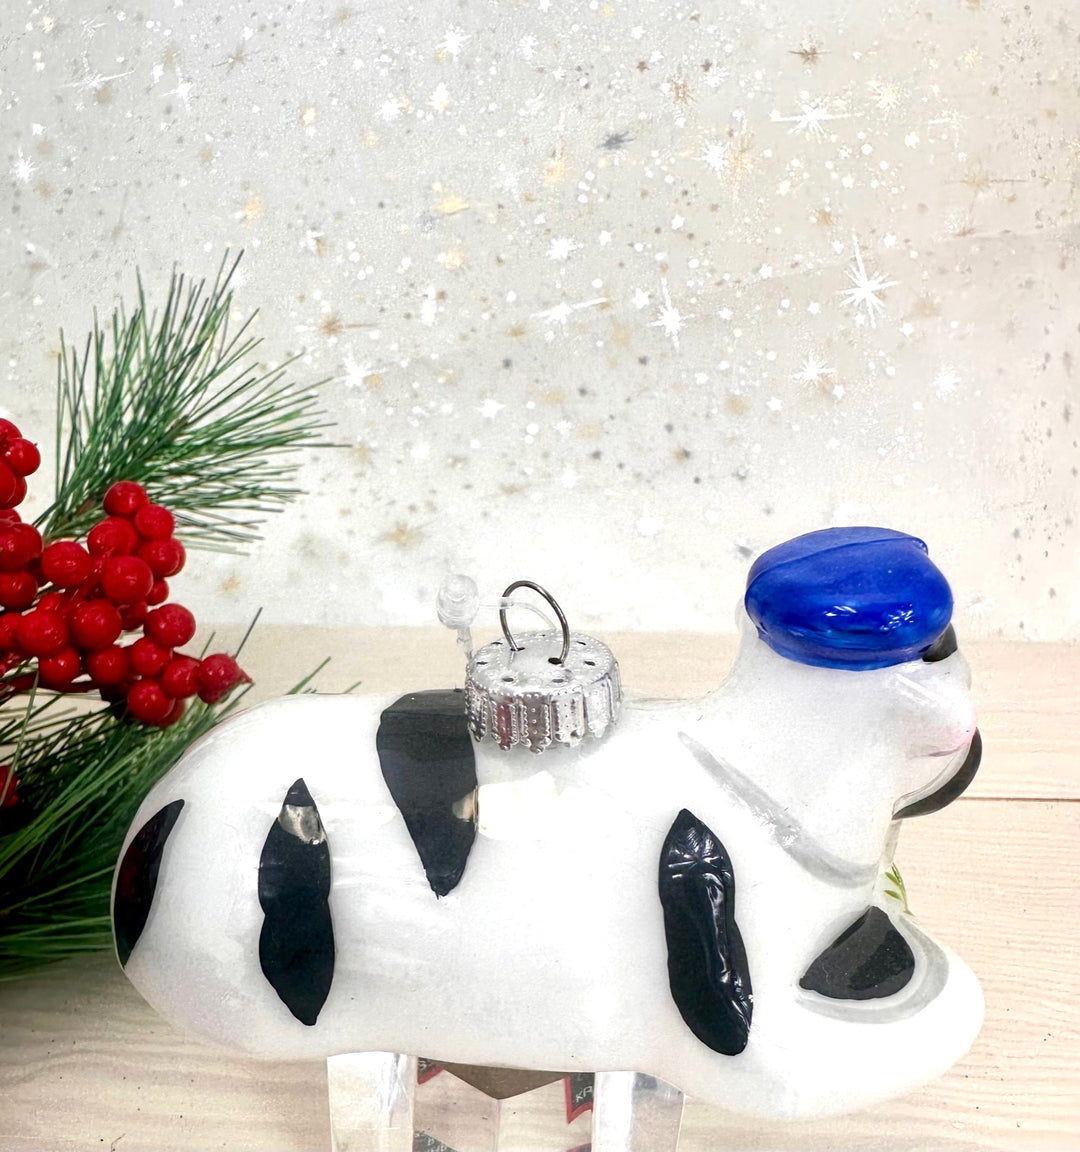 4" (100mm) Milk Cow Figurine Ornaments, 1/Box, 6/Case, 24 Pieces